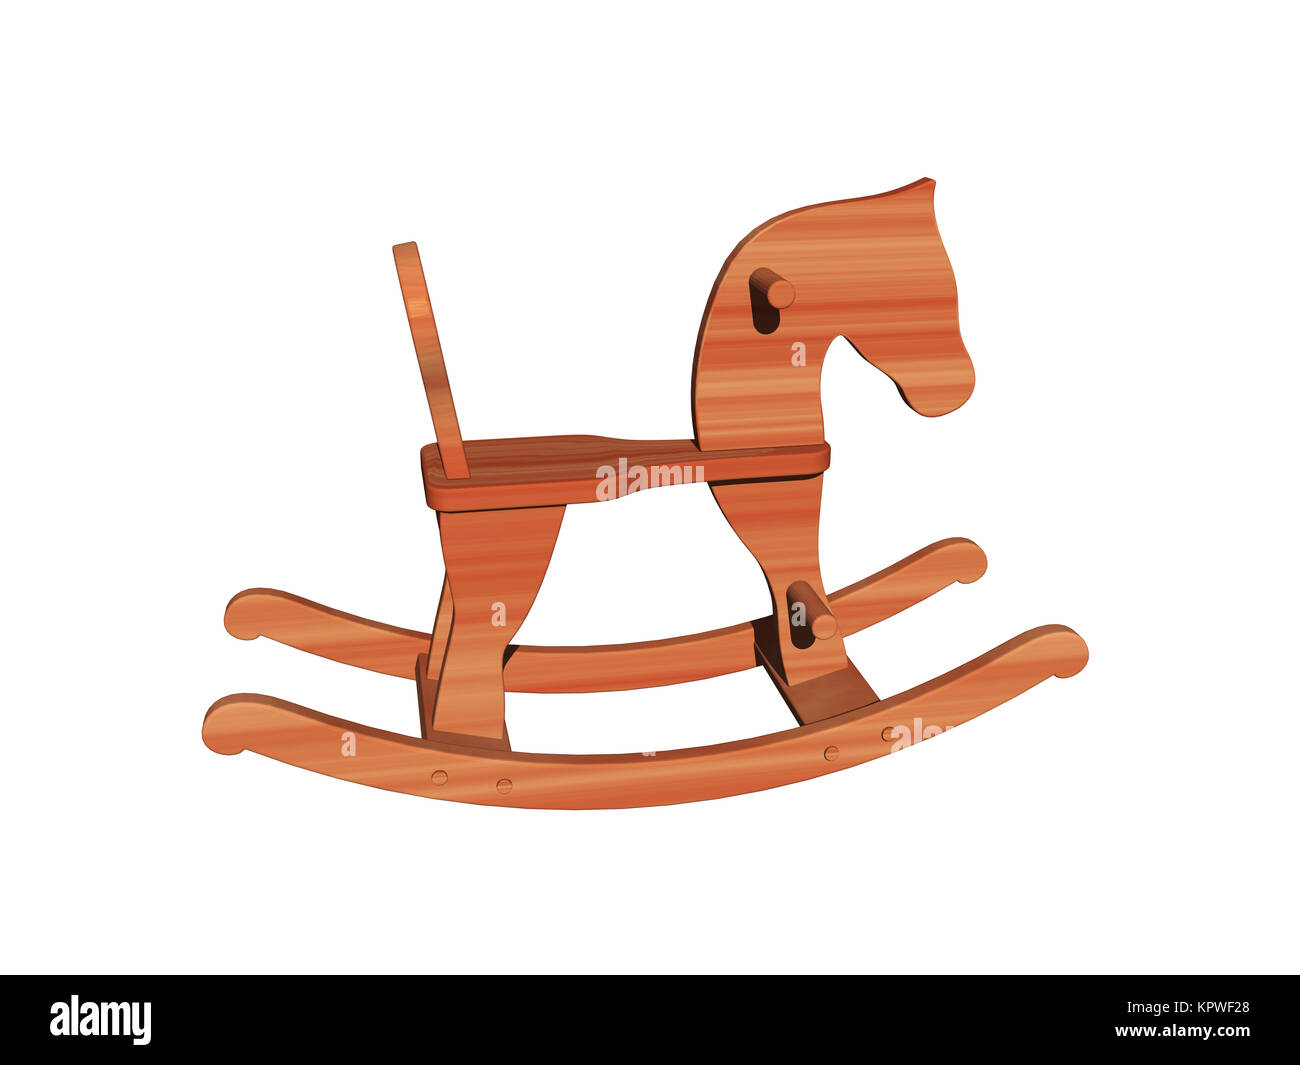 rocking horse made of wood free Stock Photo